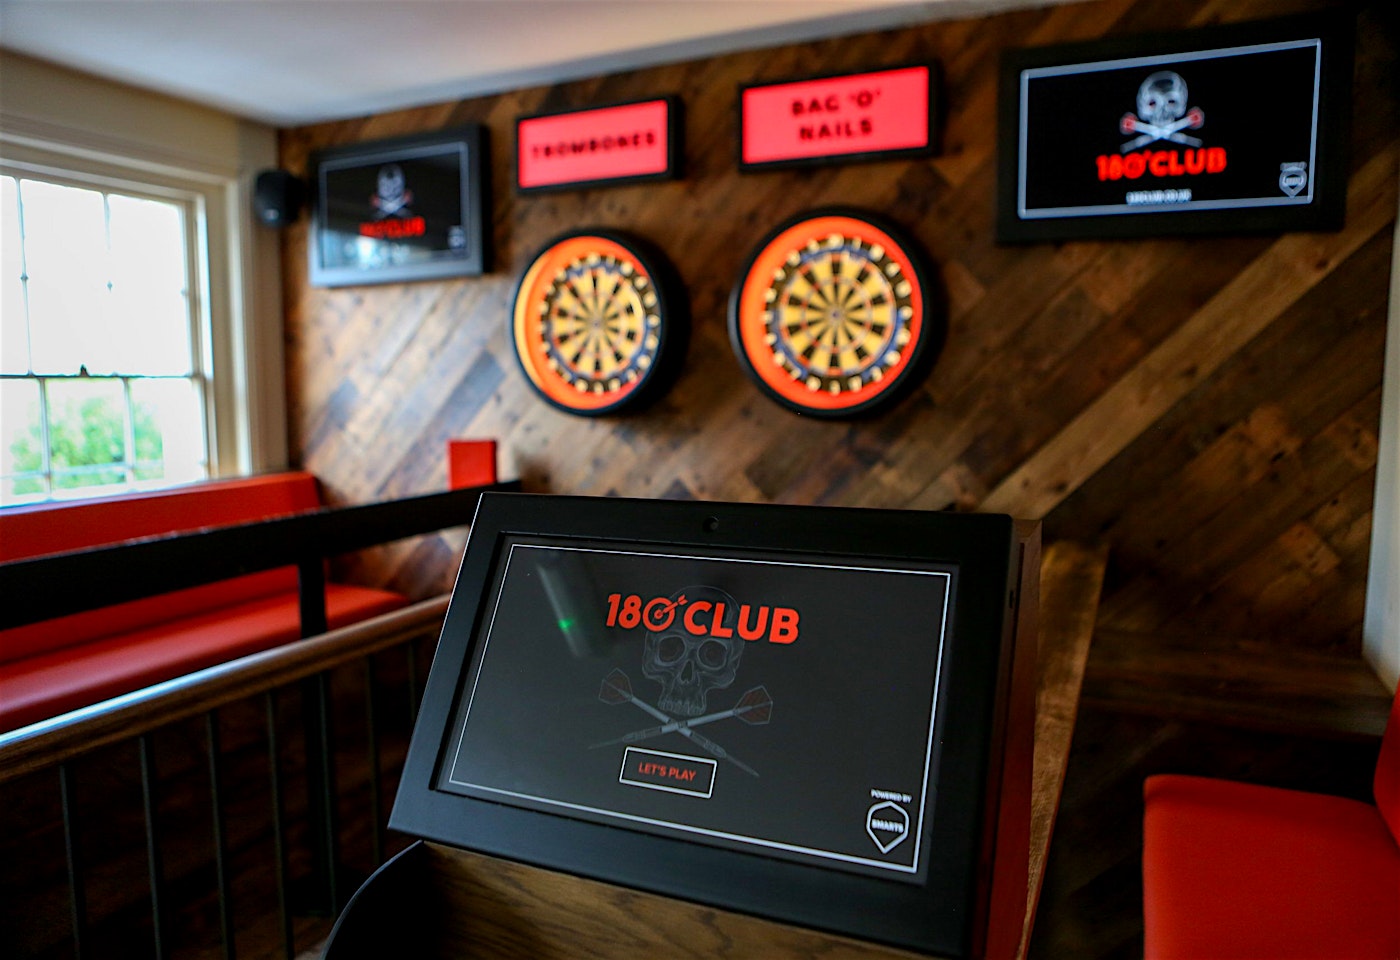 180 darts club at austrin friars balls brothers city of london team-building activity venue